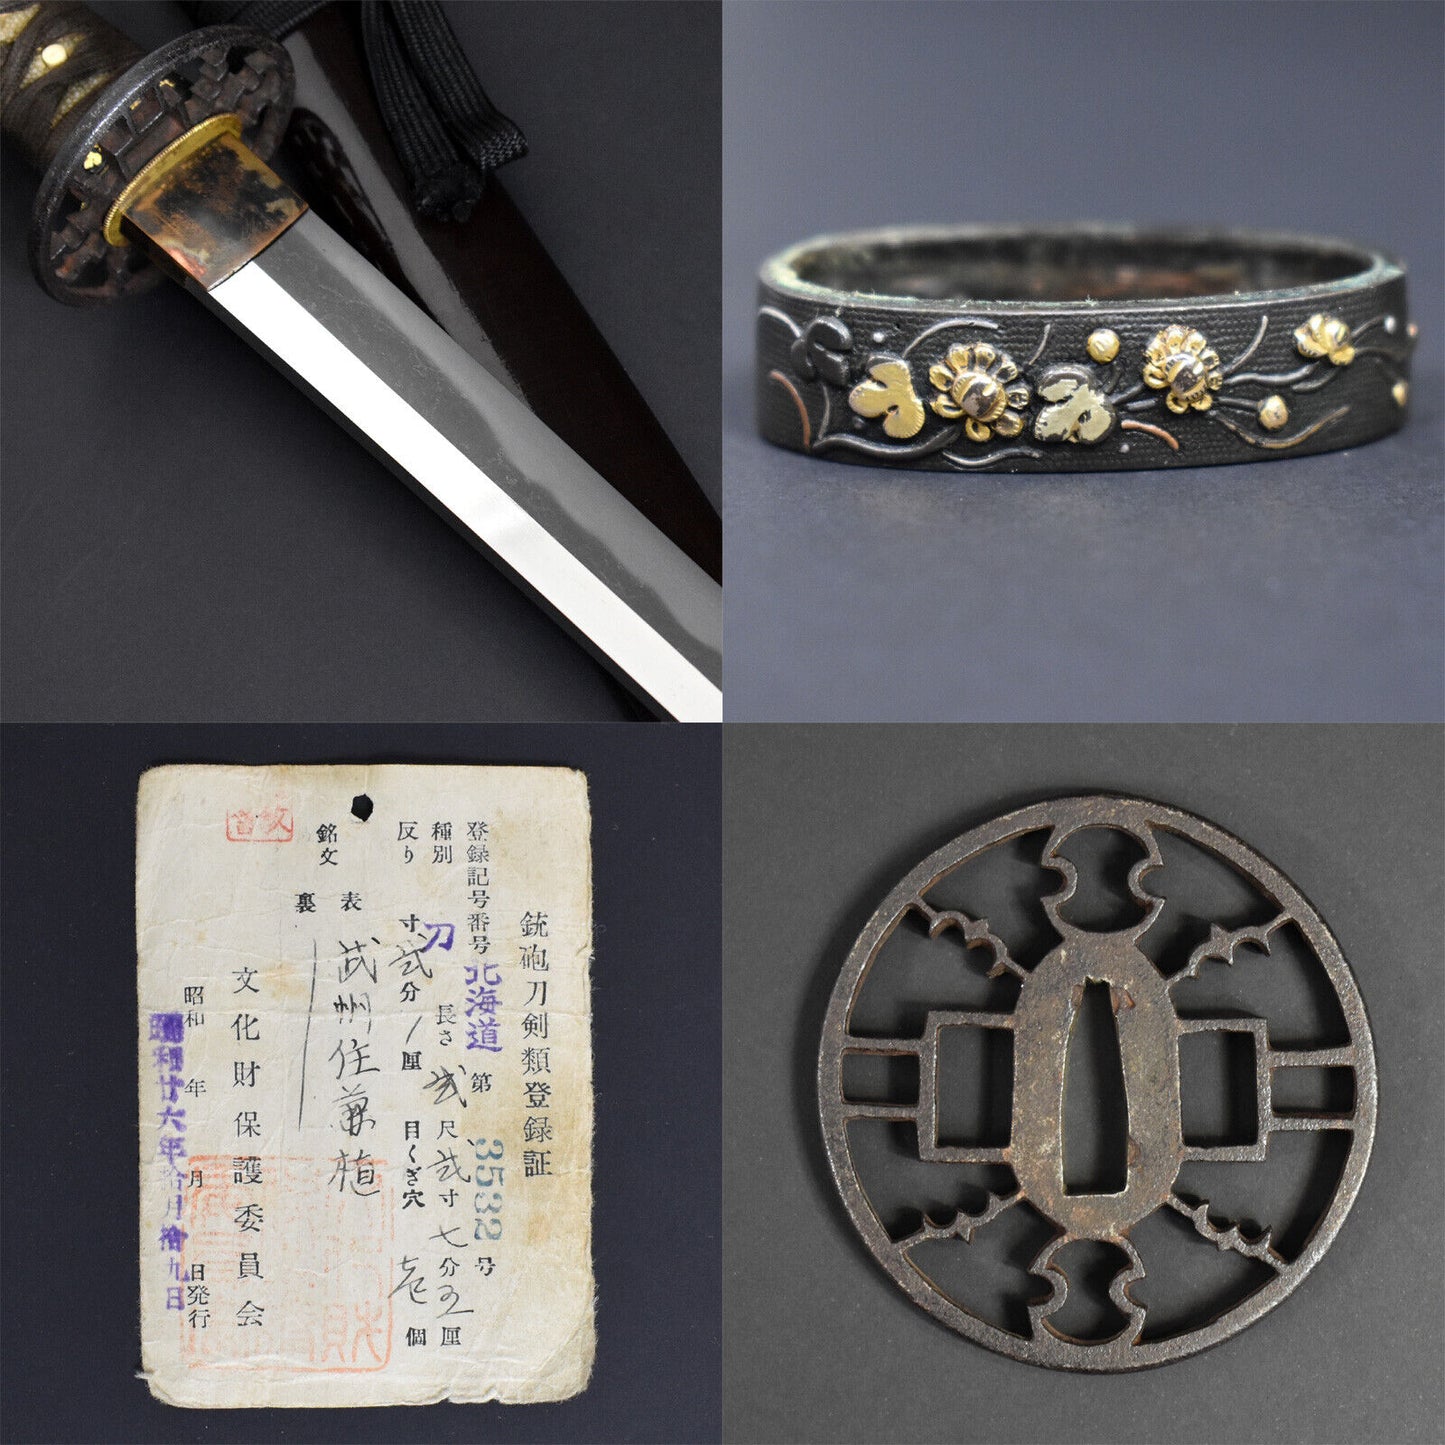 Collectible Signed Japanese Katana Samurai Sword Tamahagane Steel Edo Era.